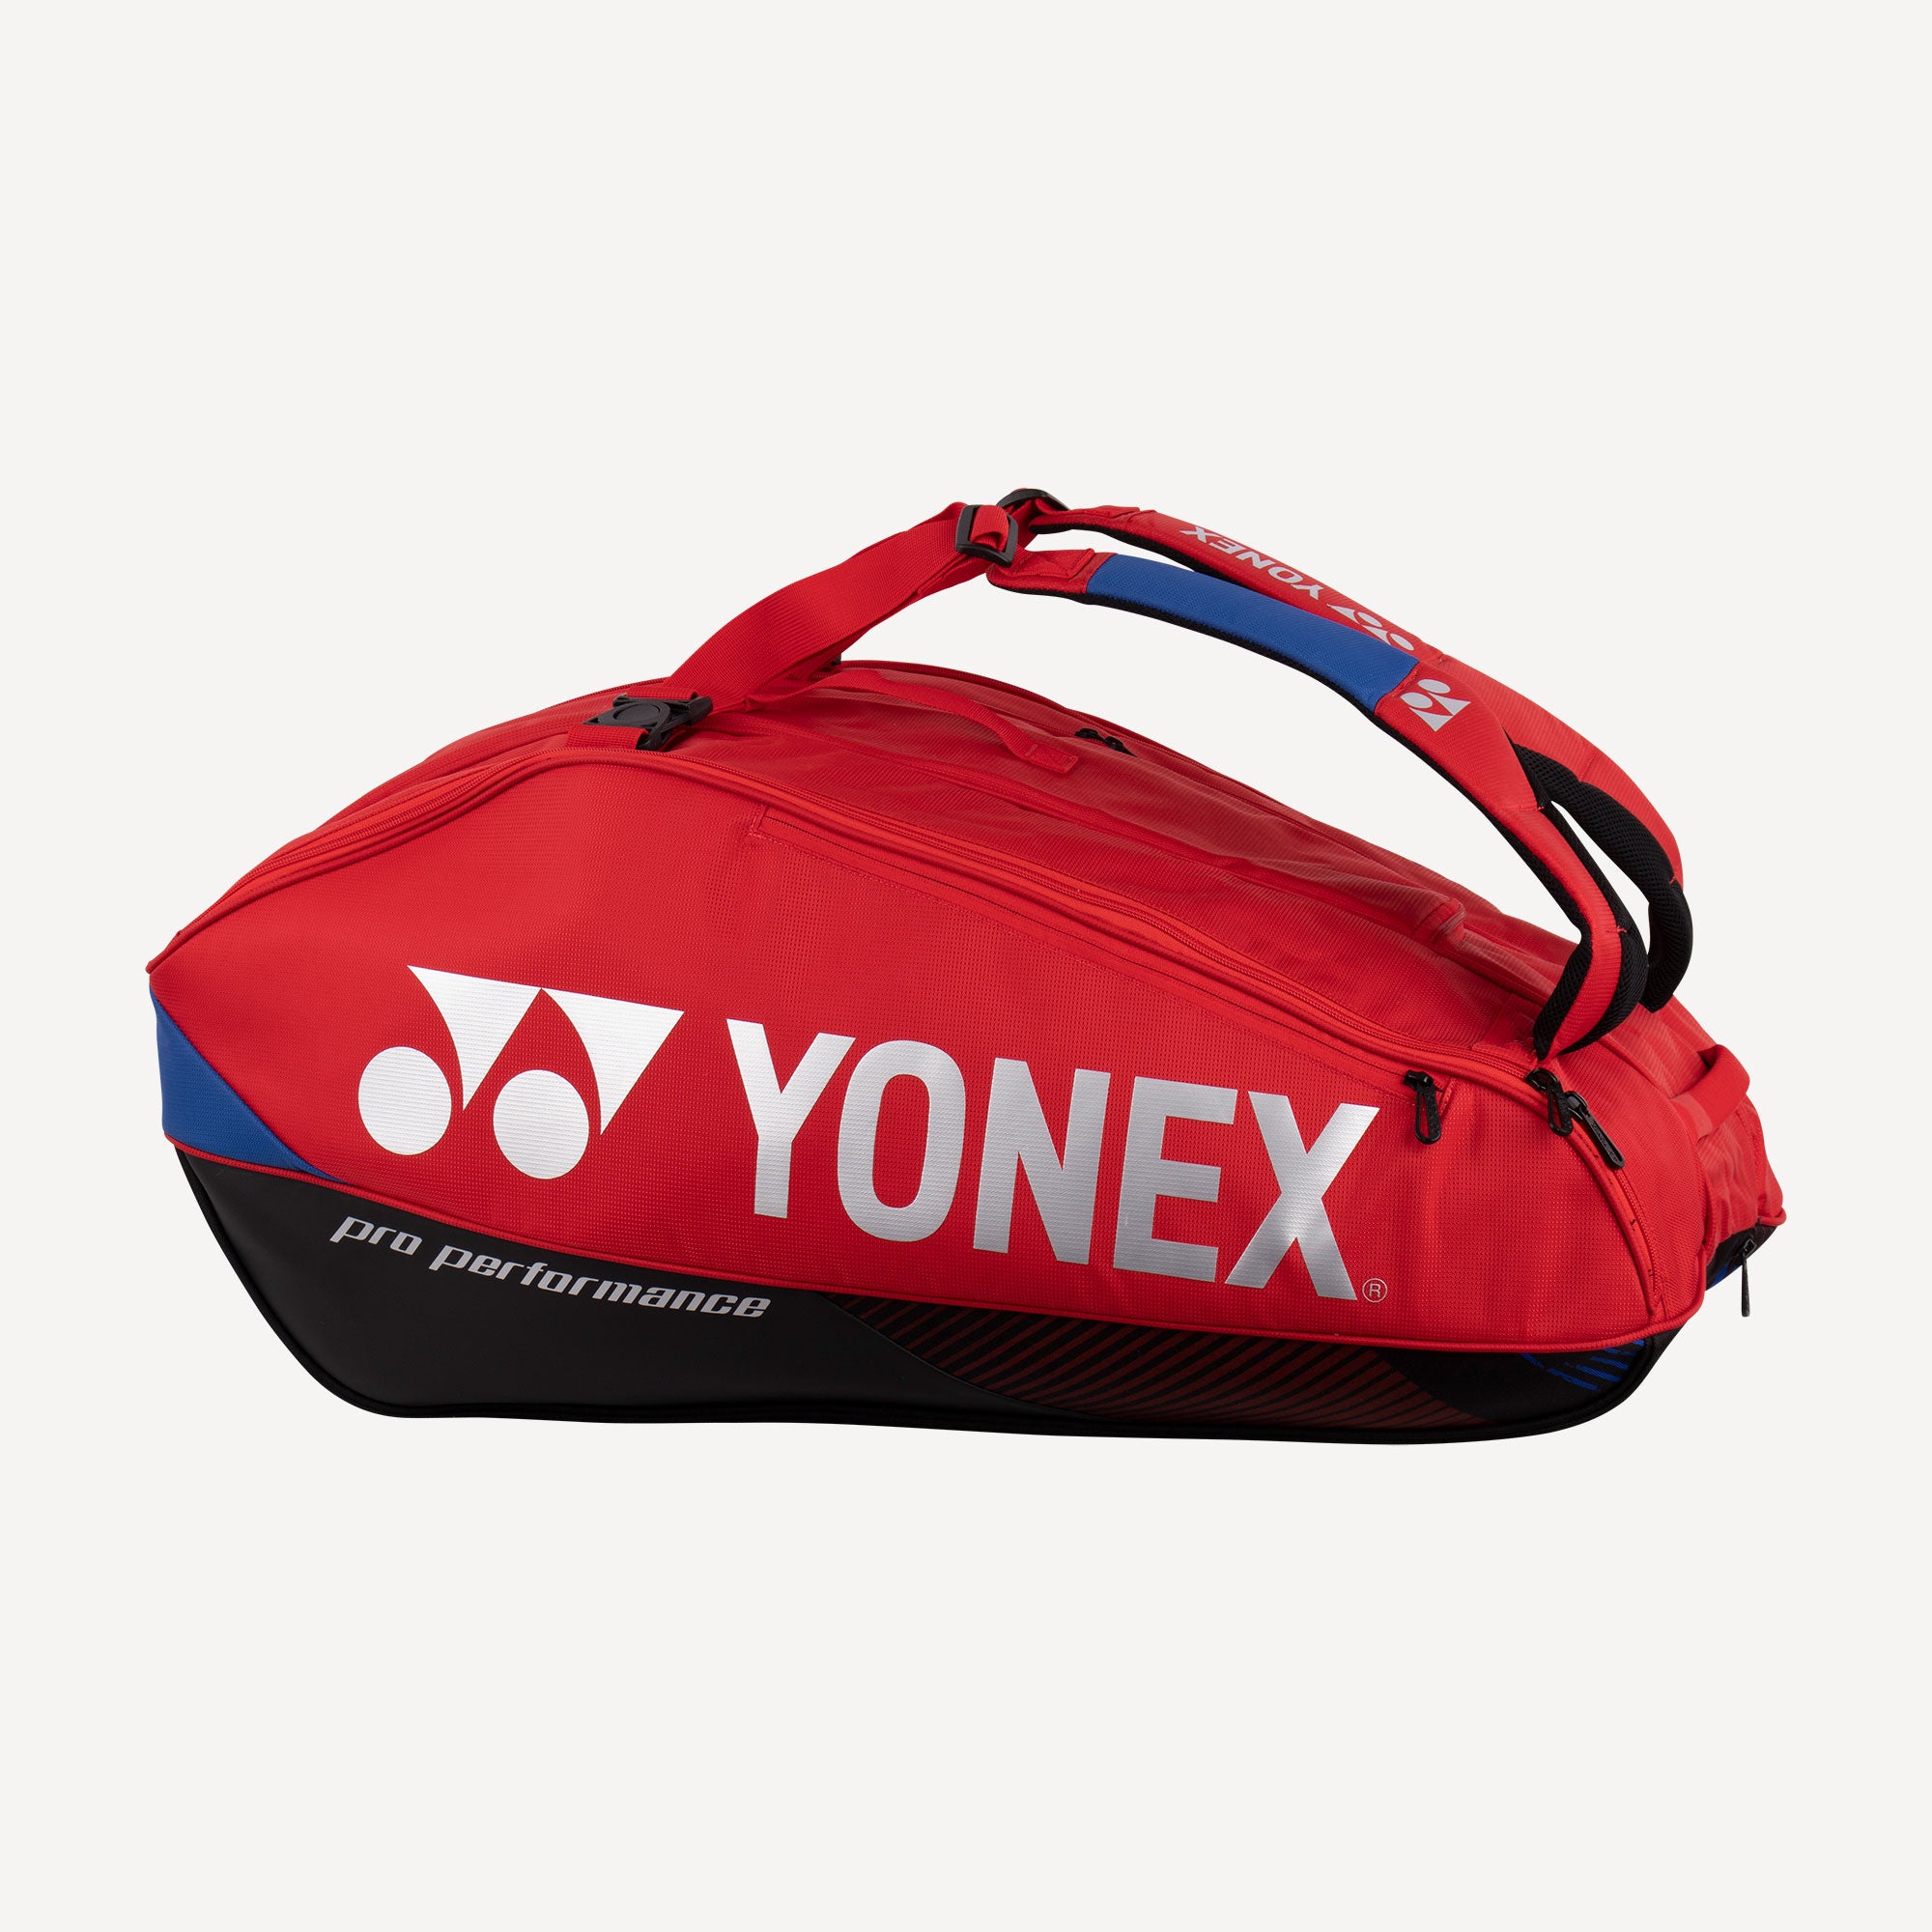 Yonex Pro 9 Racket Tennis Bag - Red (2)